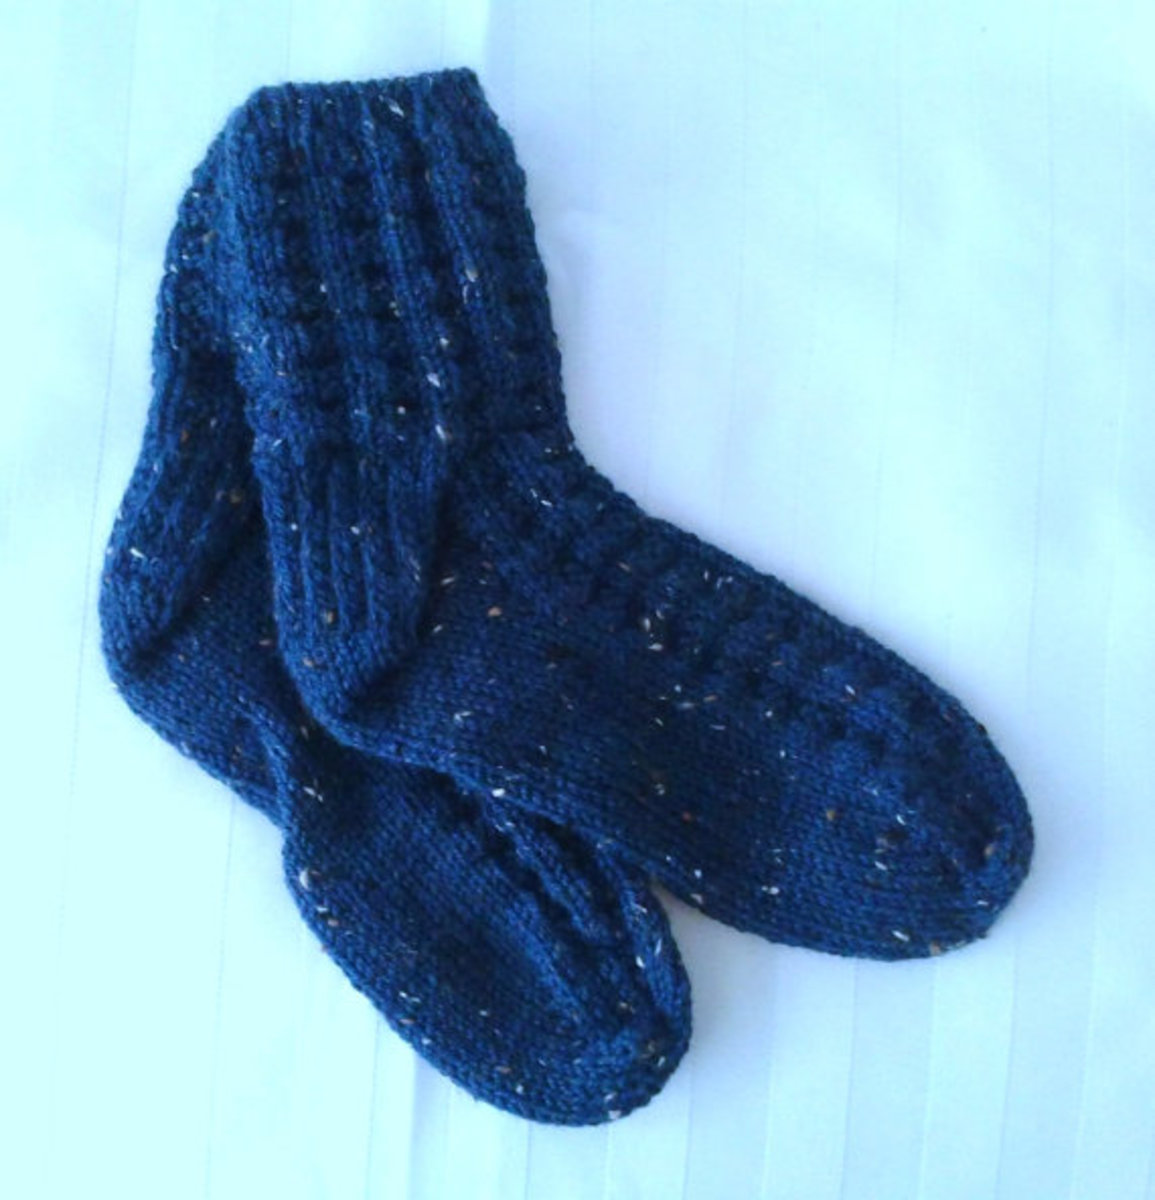 Hand Knit Socks in acrylic wool yarn.